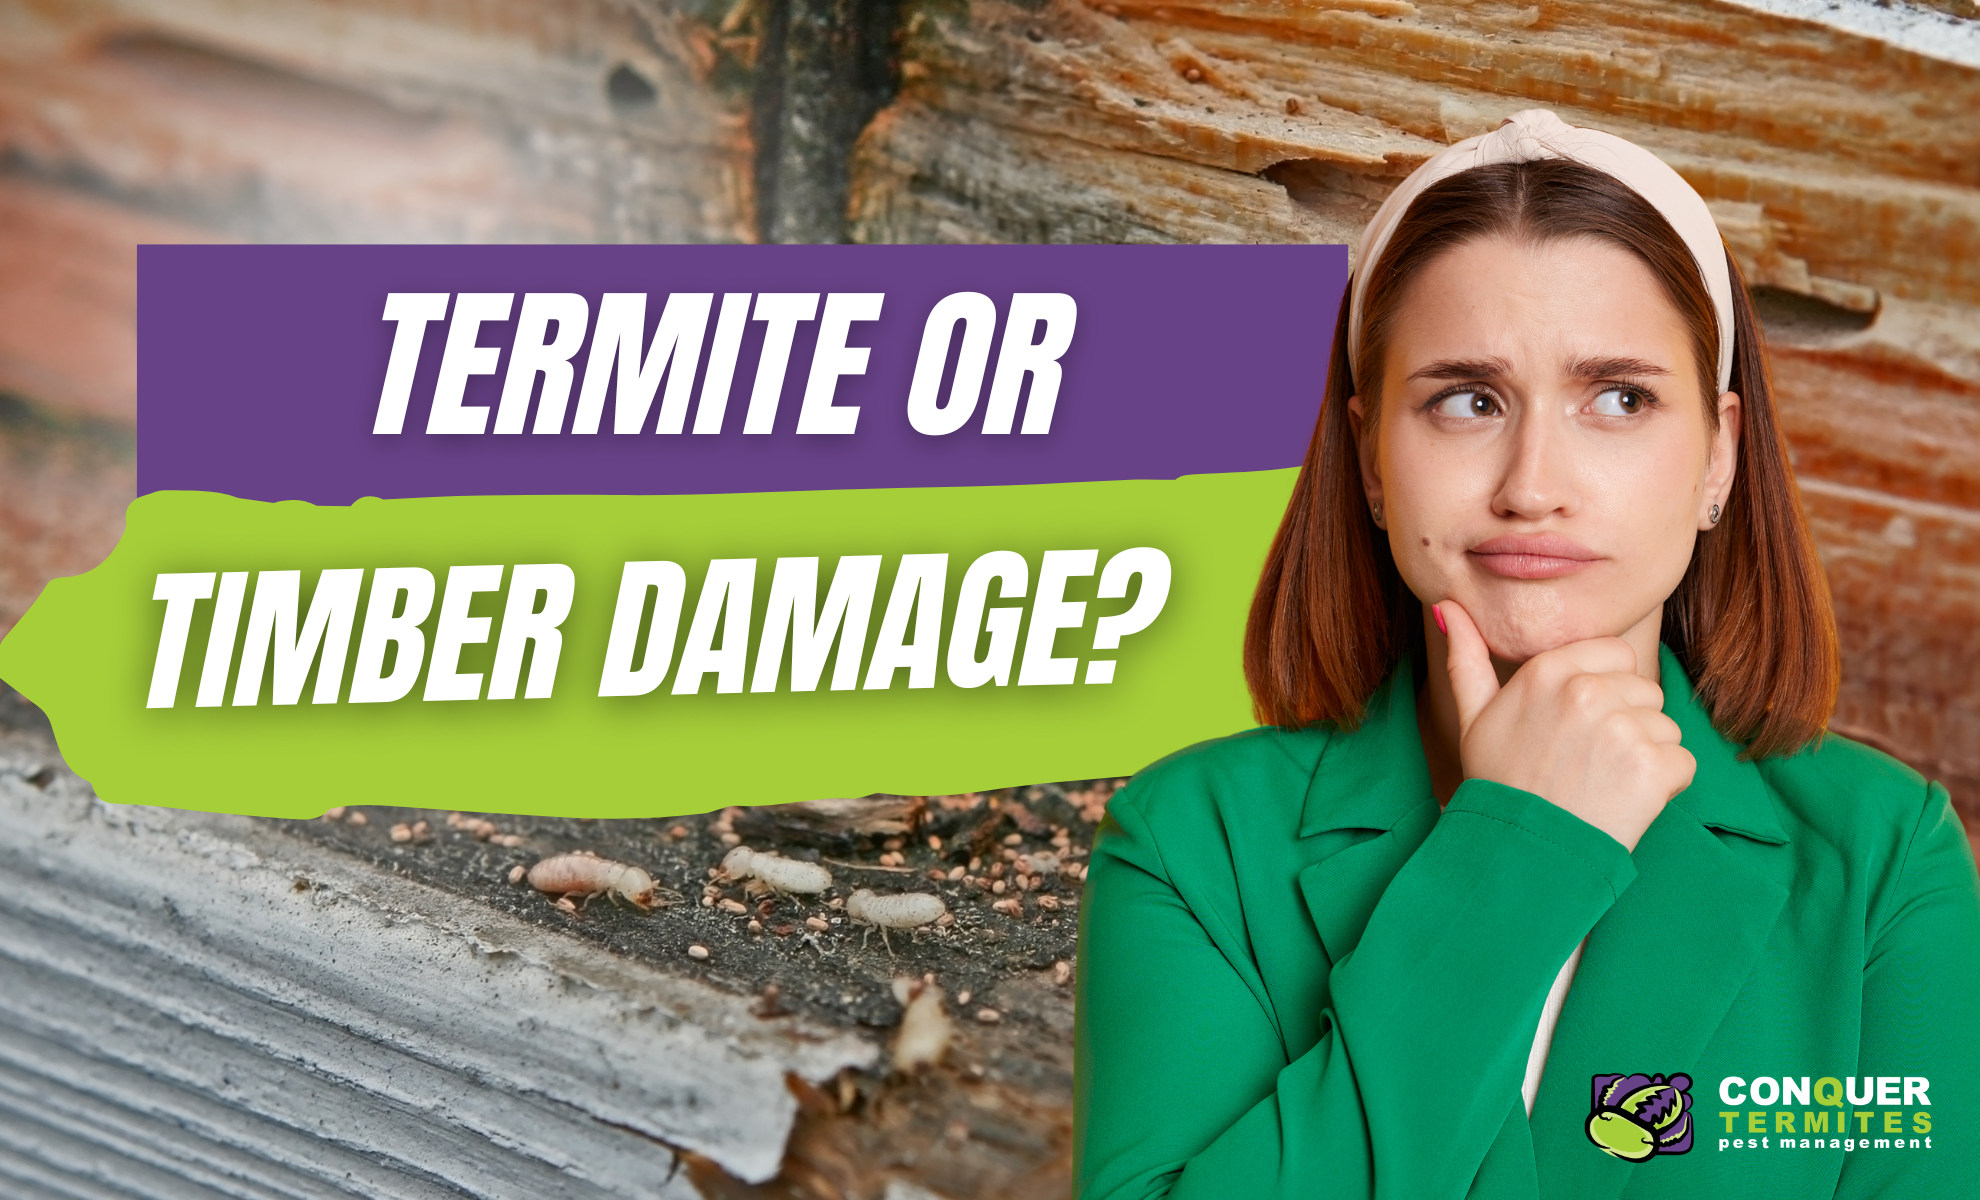 Termites or Timber Damage?